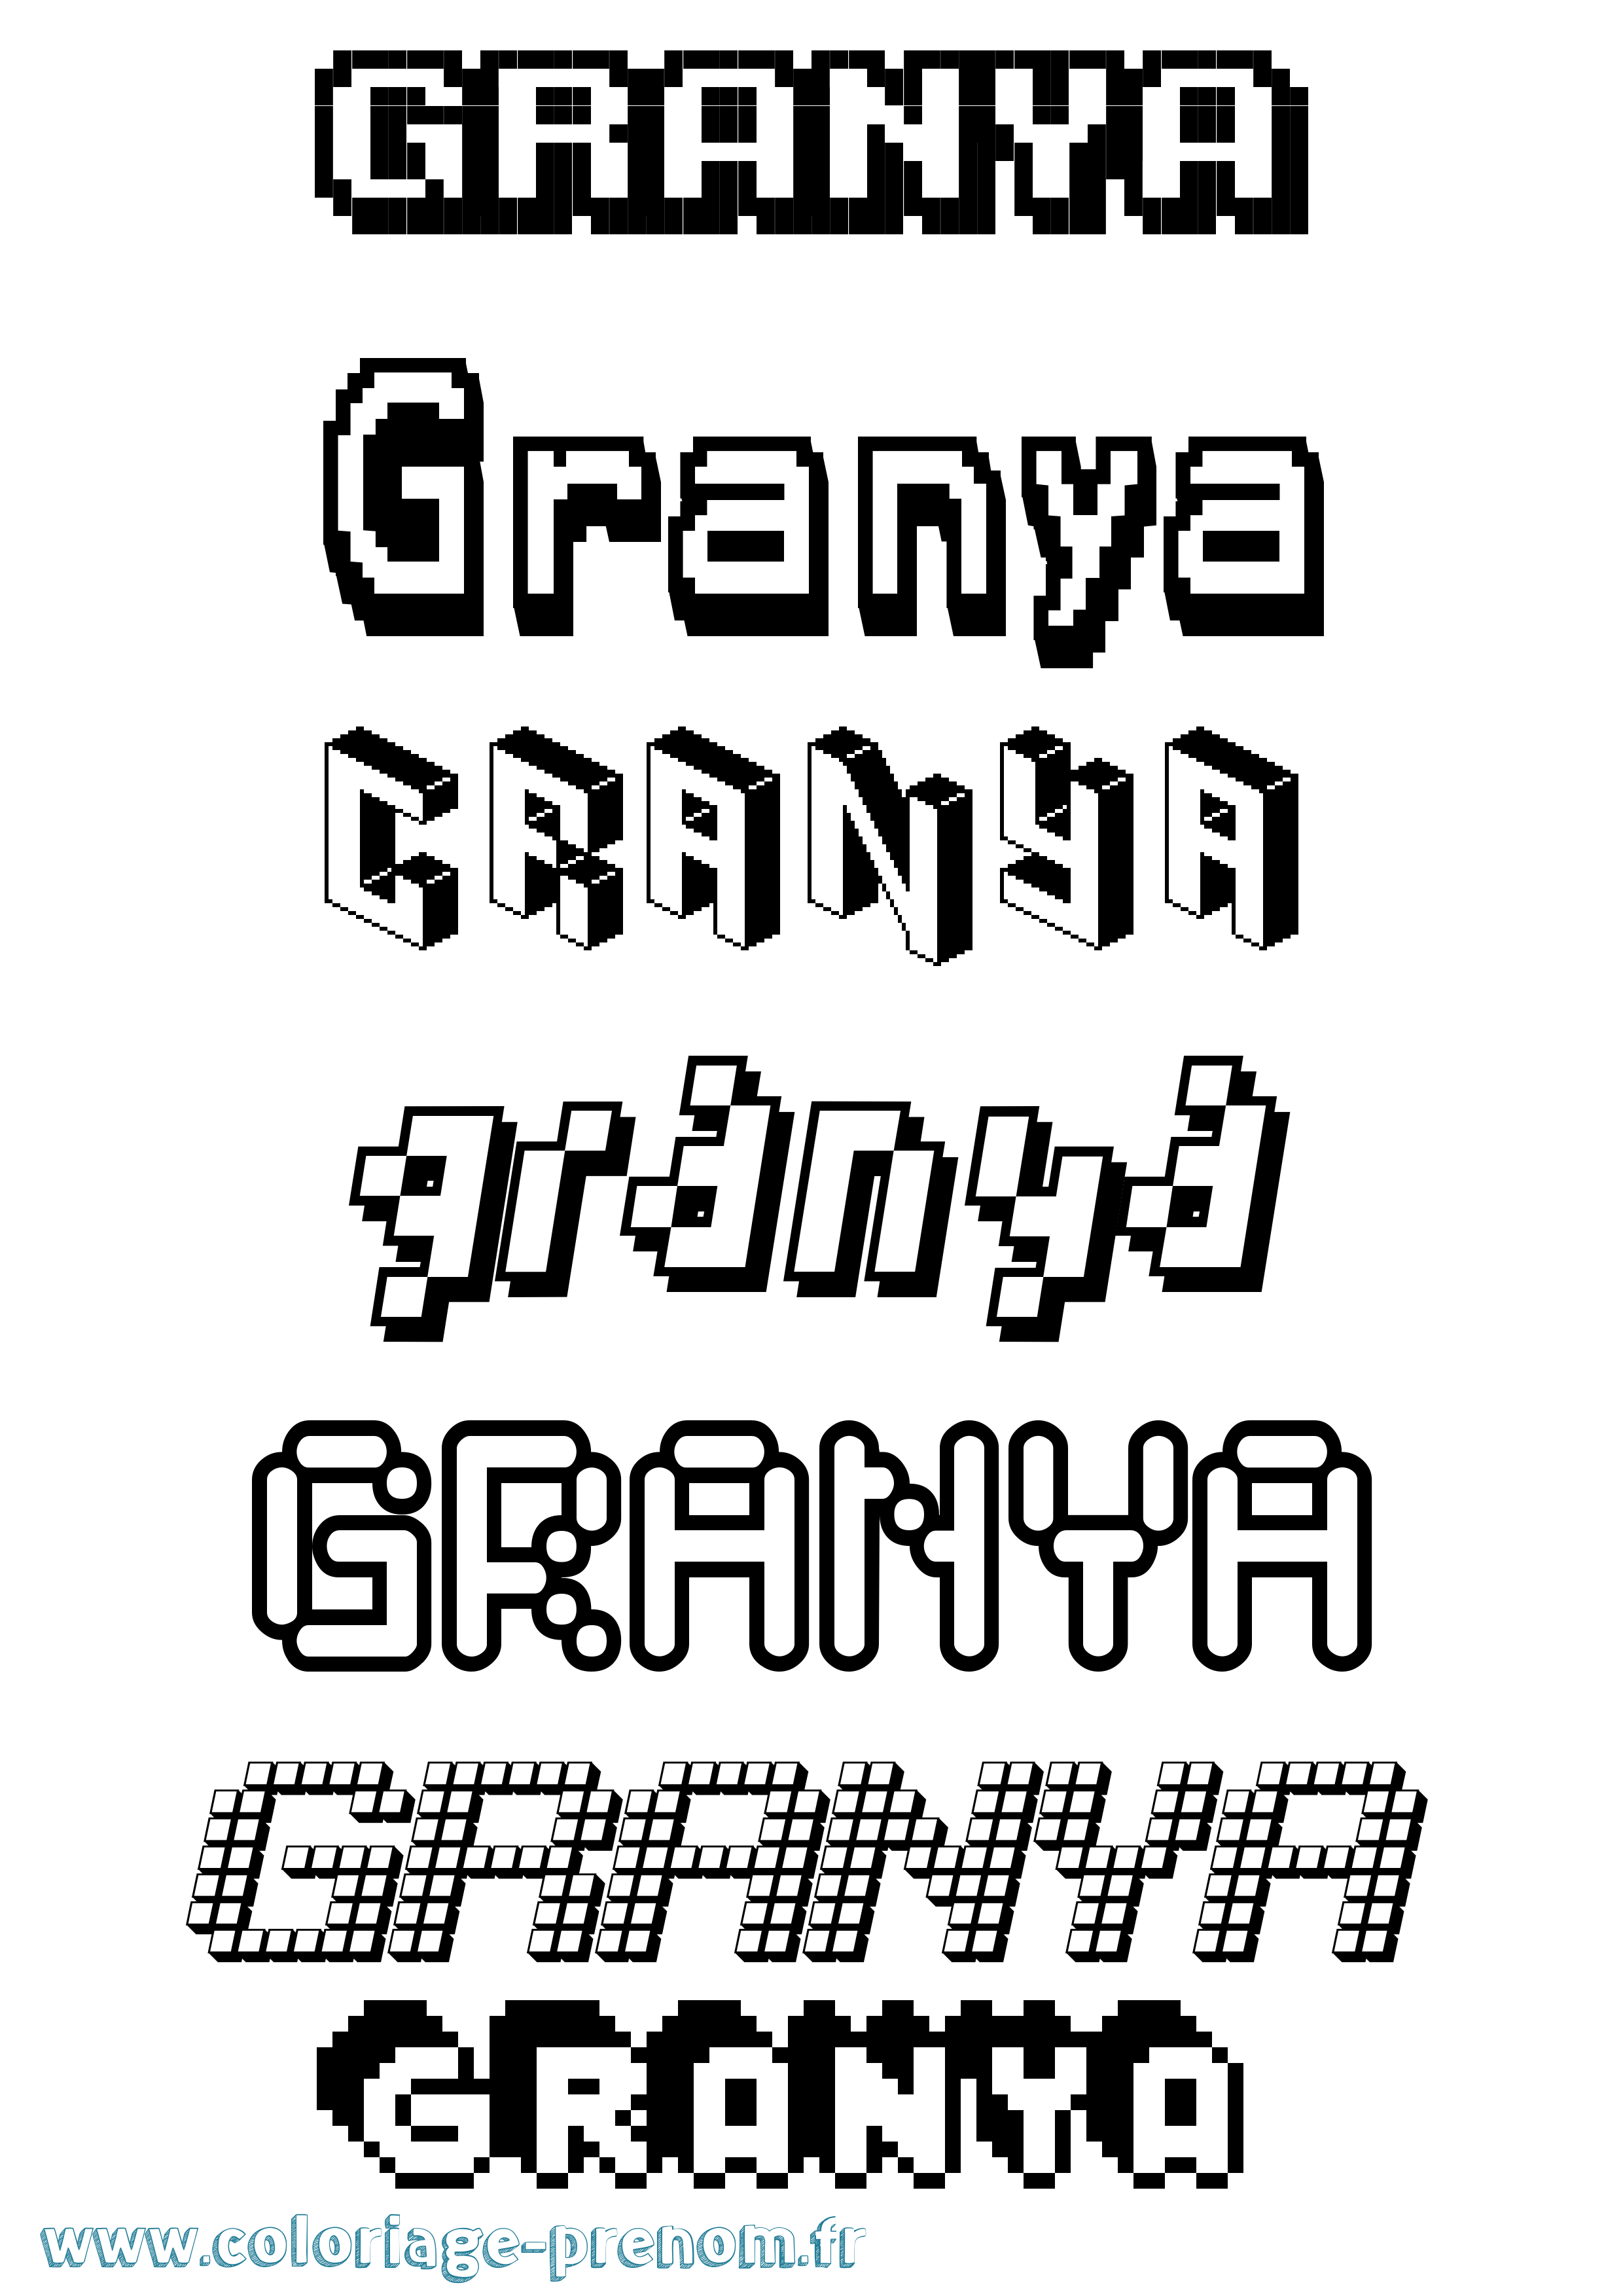 Coloriage prénom Granya Pixel